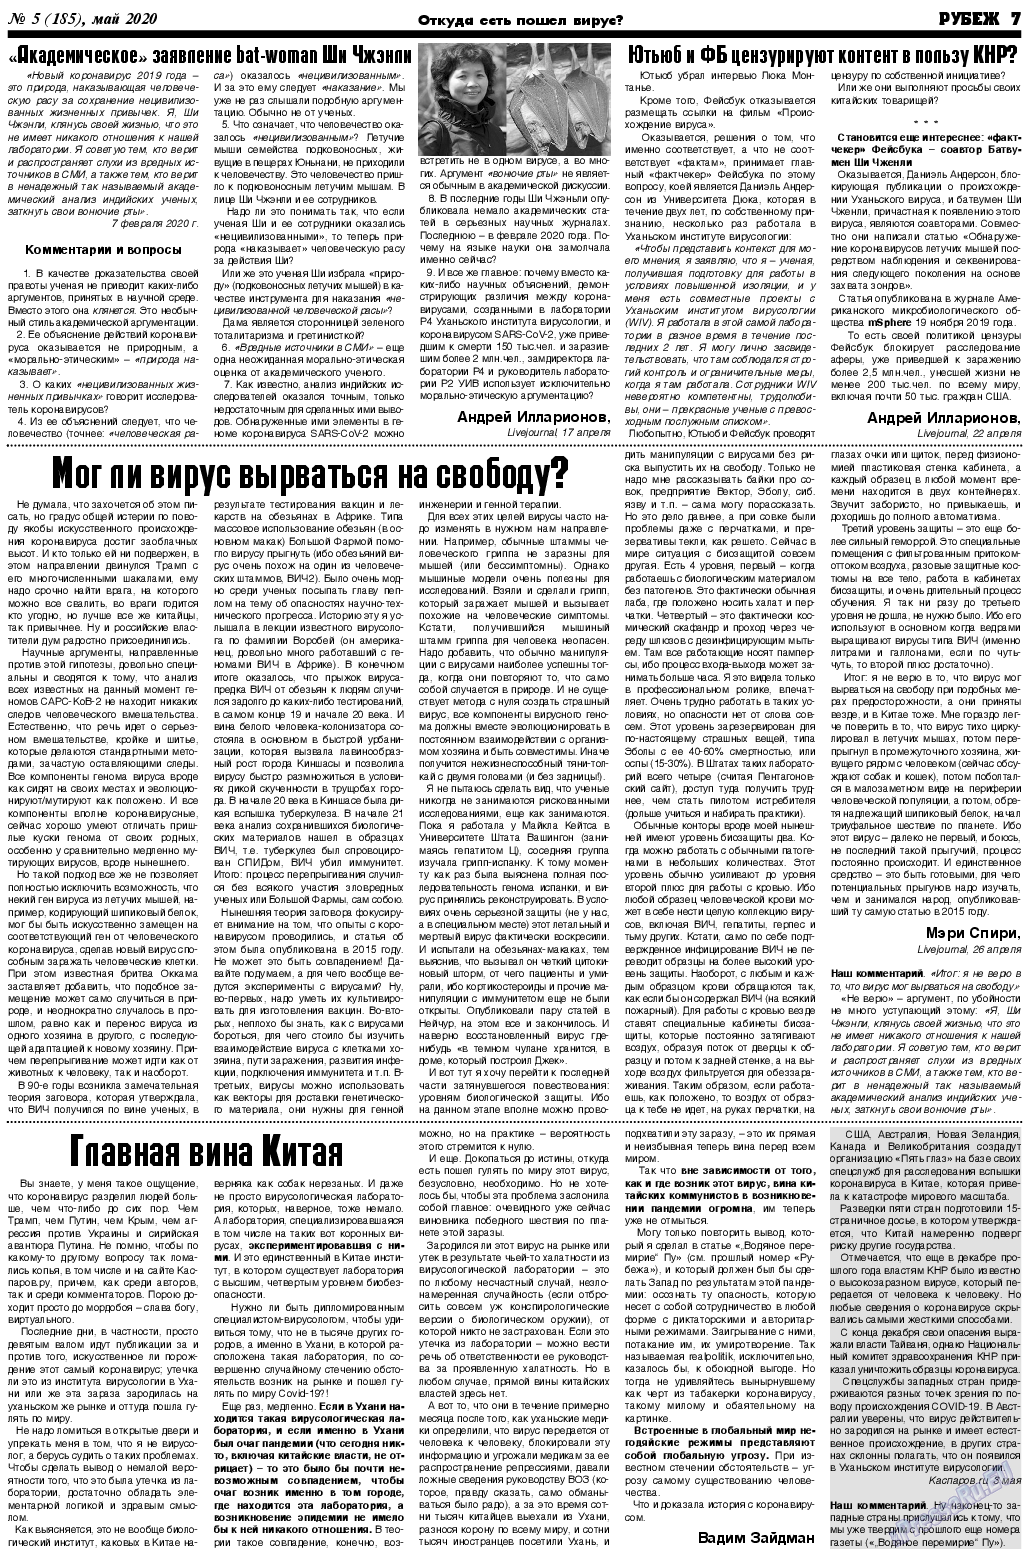 Рубеж, газета. 2020 №5 стр.7